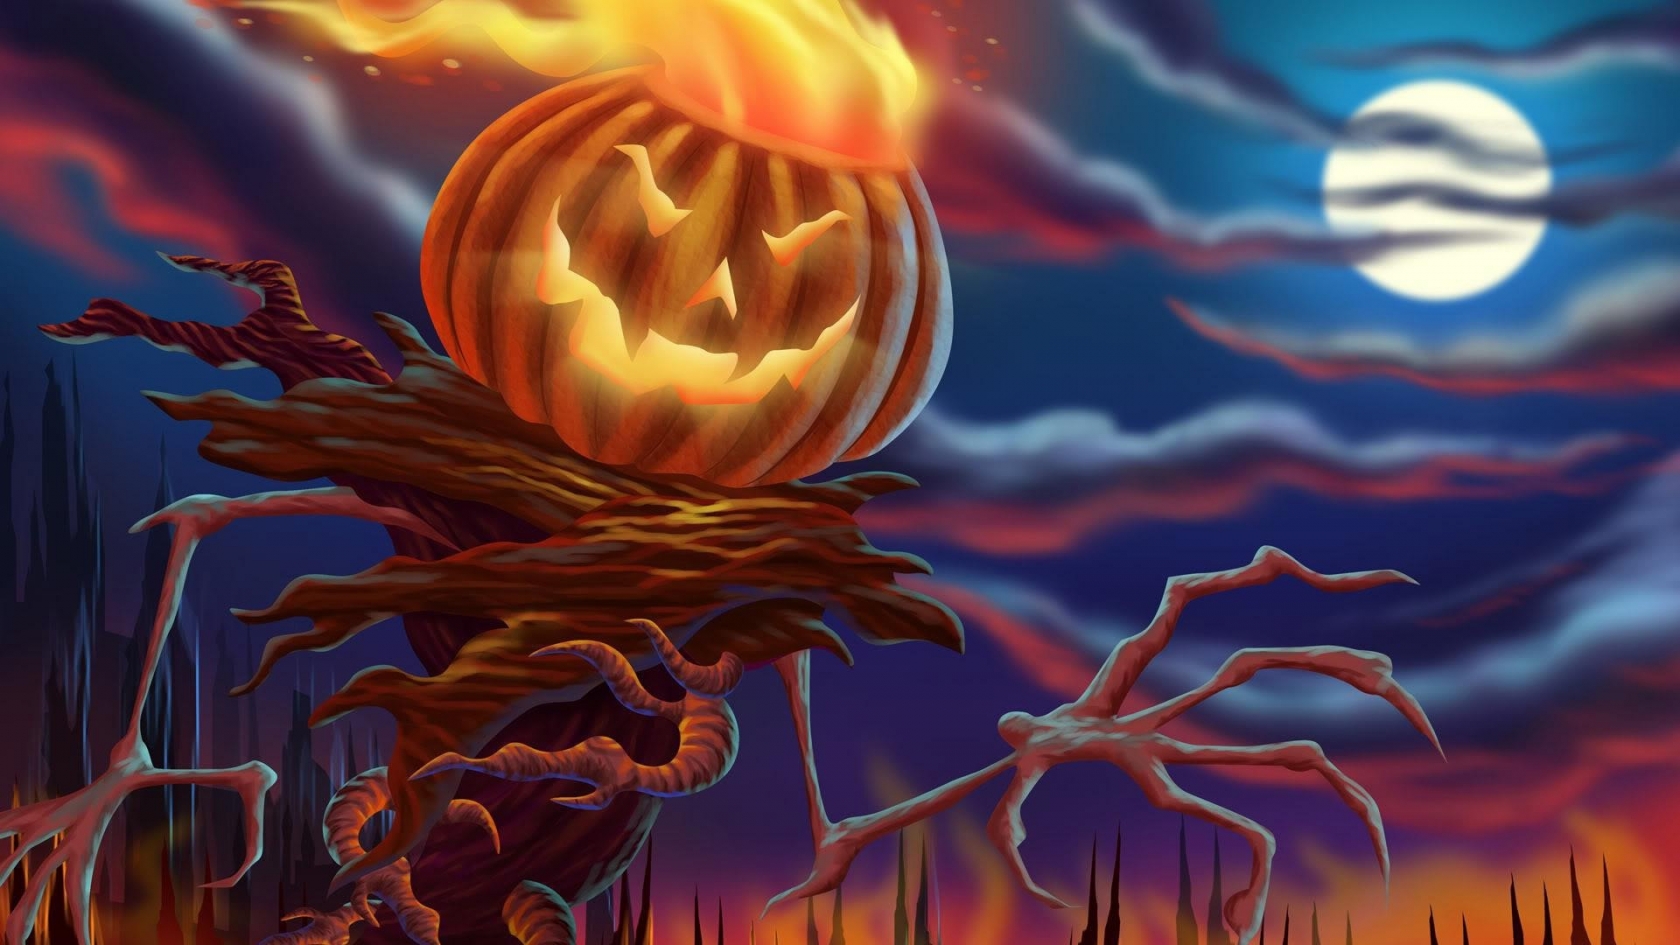 Halloween Digital Illustration for 1680 x 945 HDTV resolution